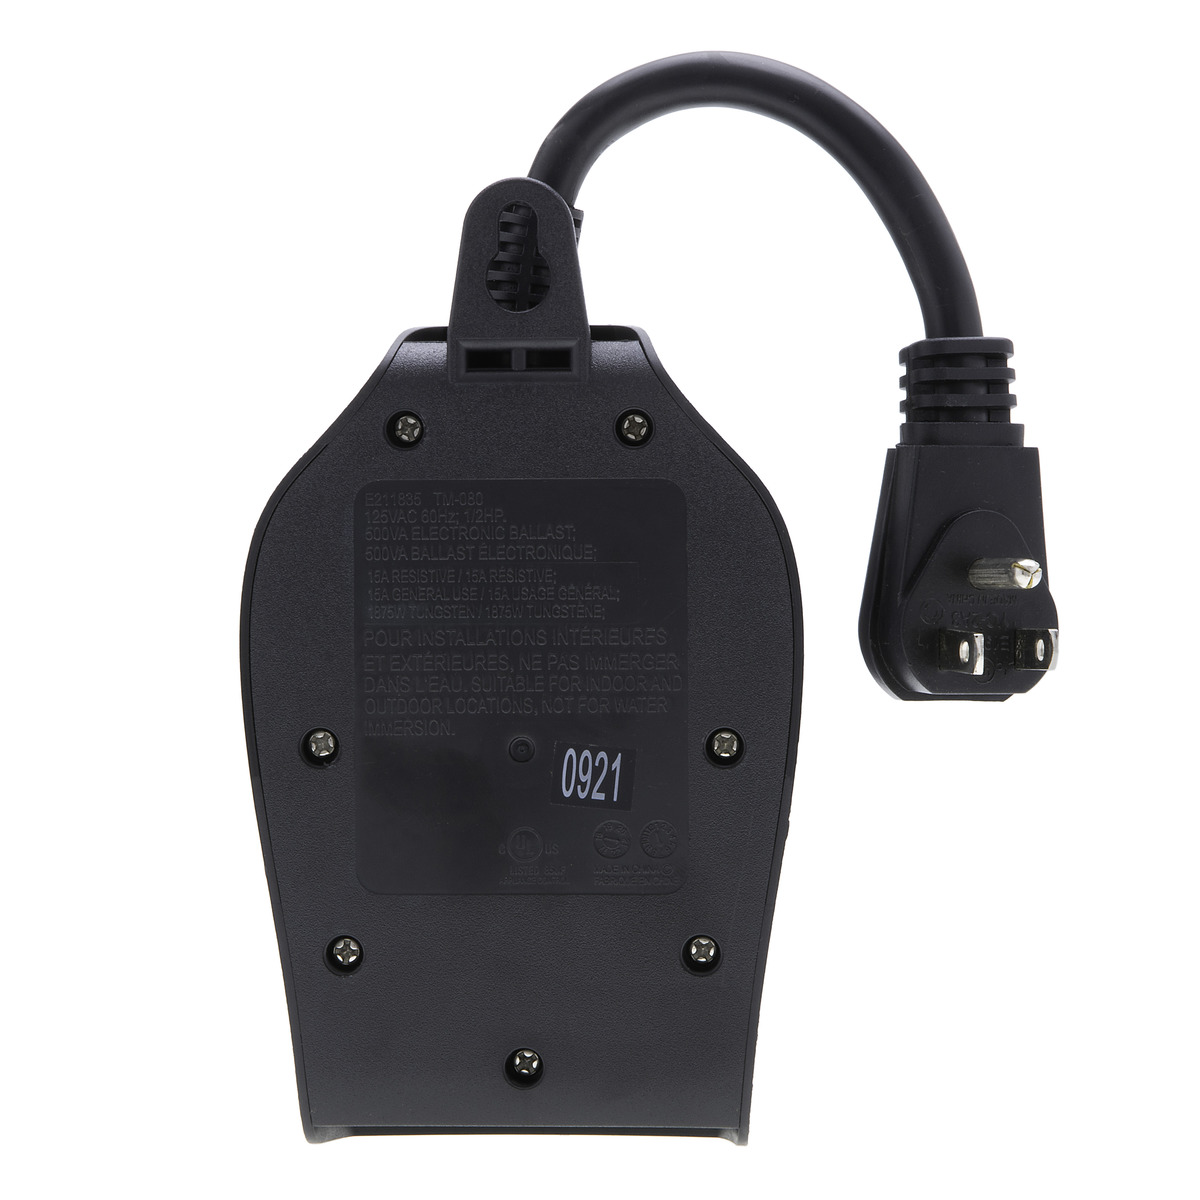 NSI Industries 405B 24-Hour Mechanical Indoor Plug-In 2-Outlet Lighting  Timer